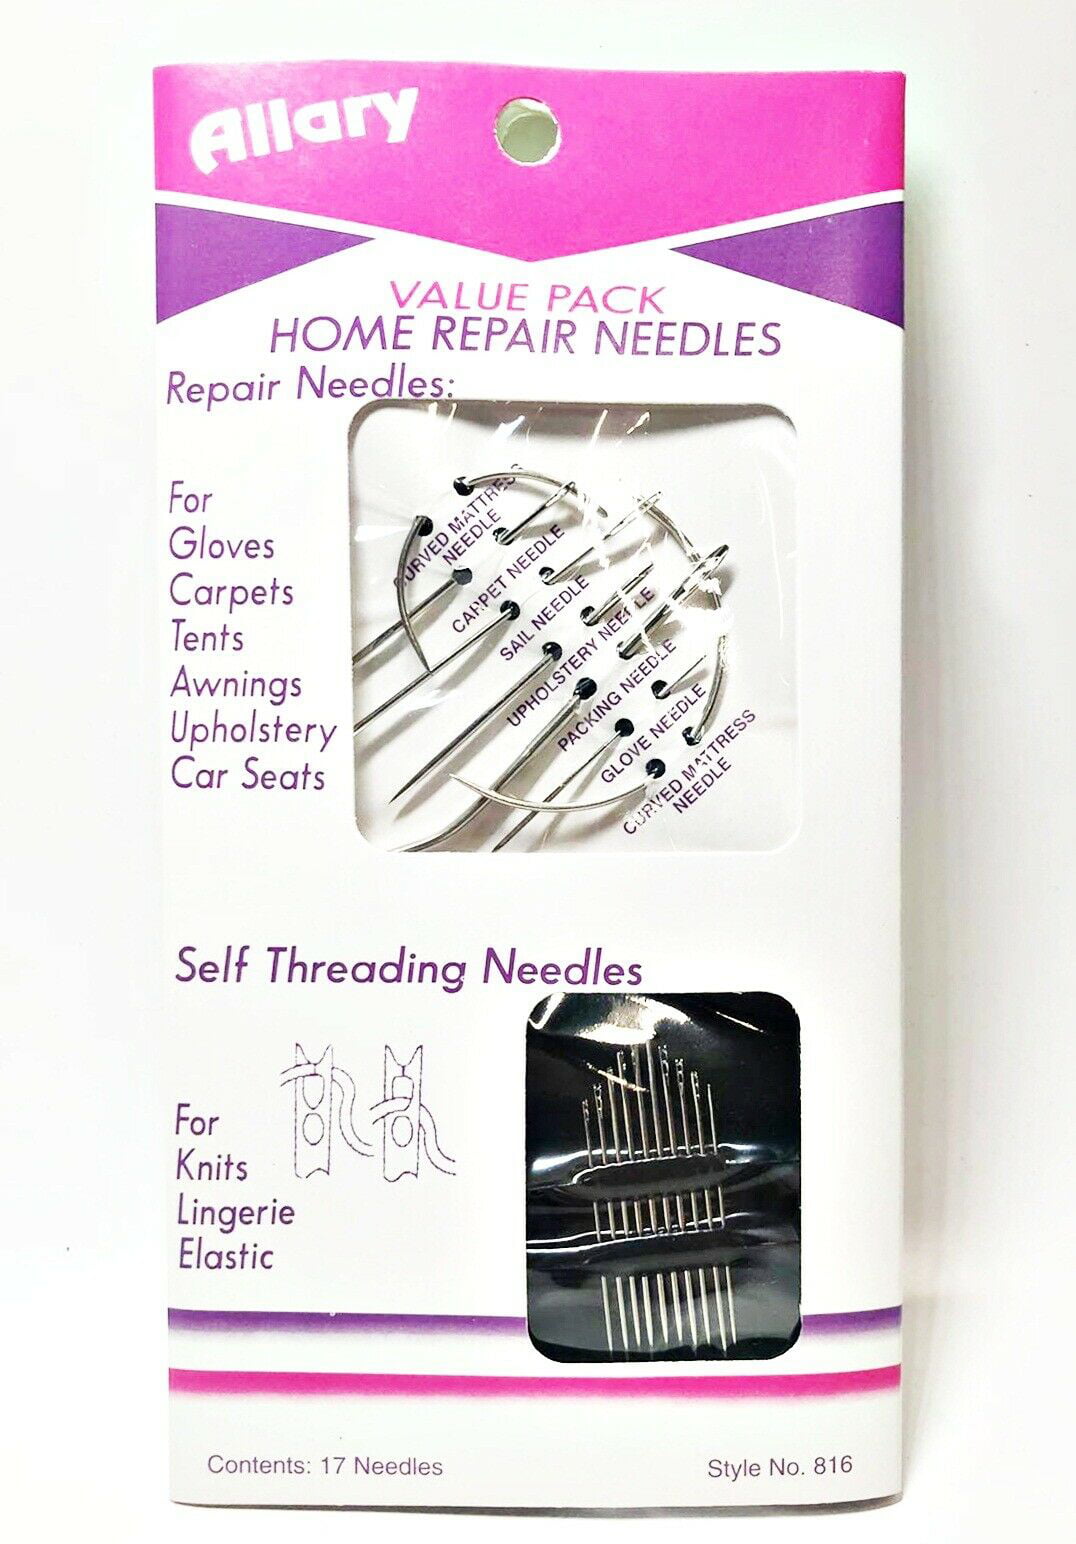 Allary Sewing Repair Kit.1 Instant Repair & Hem Tape,6 Pre-Threaded Hand Needles